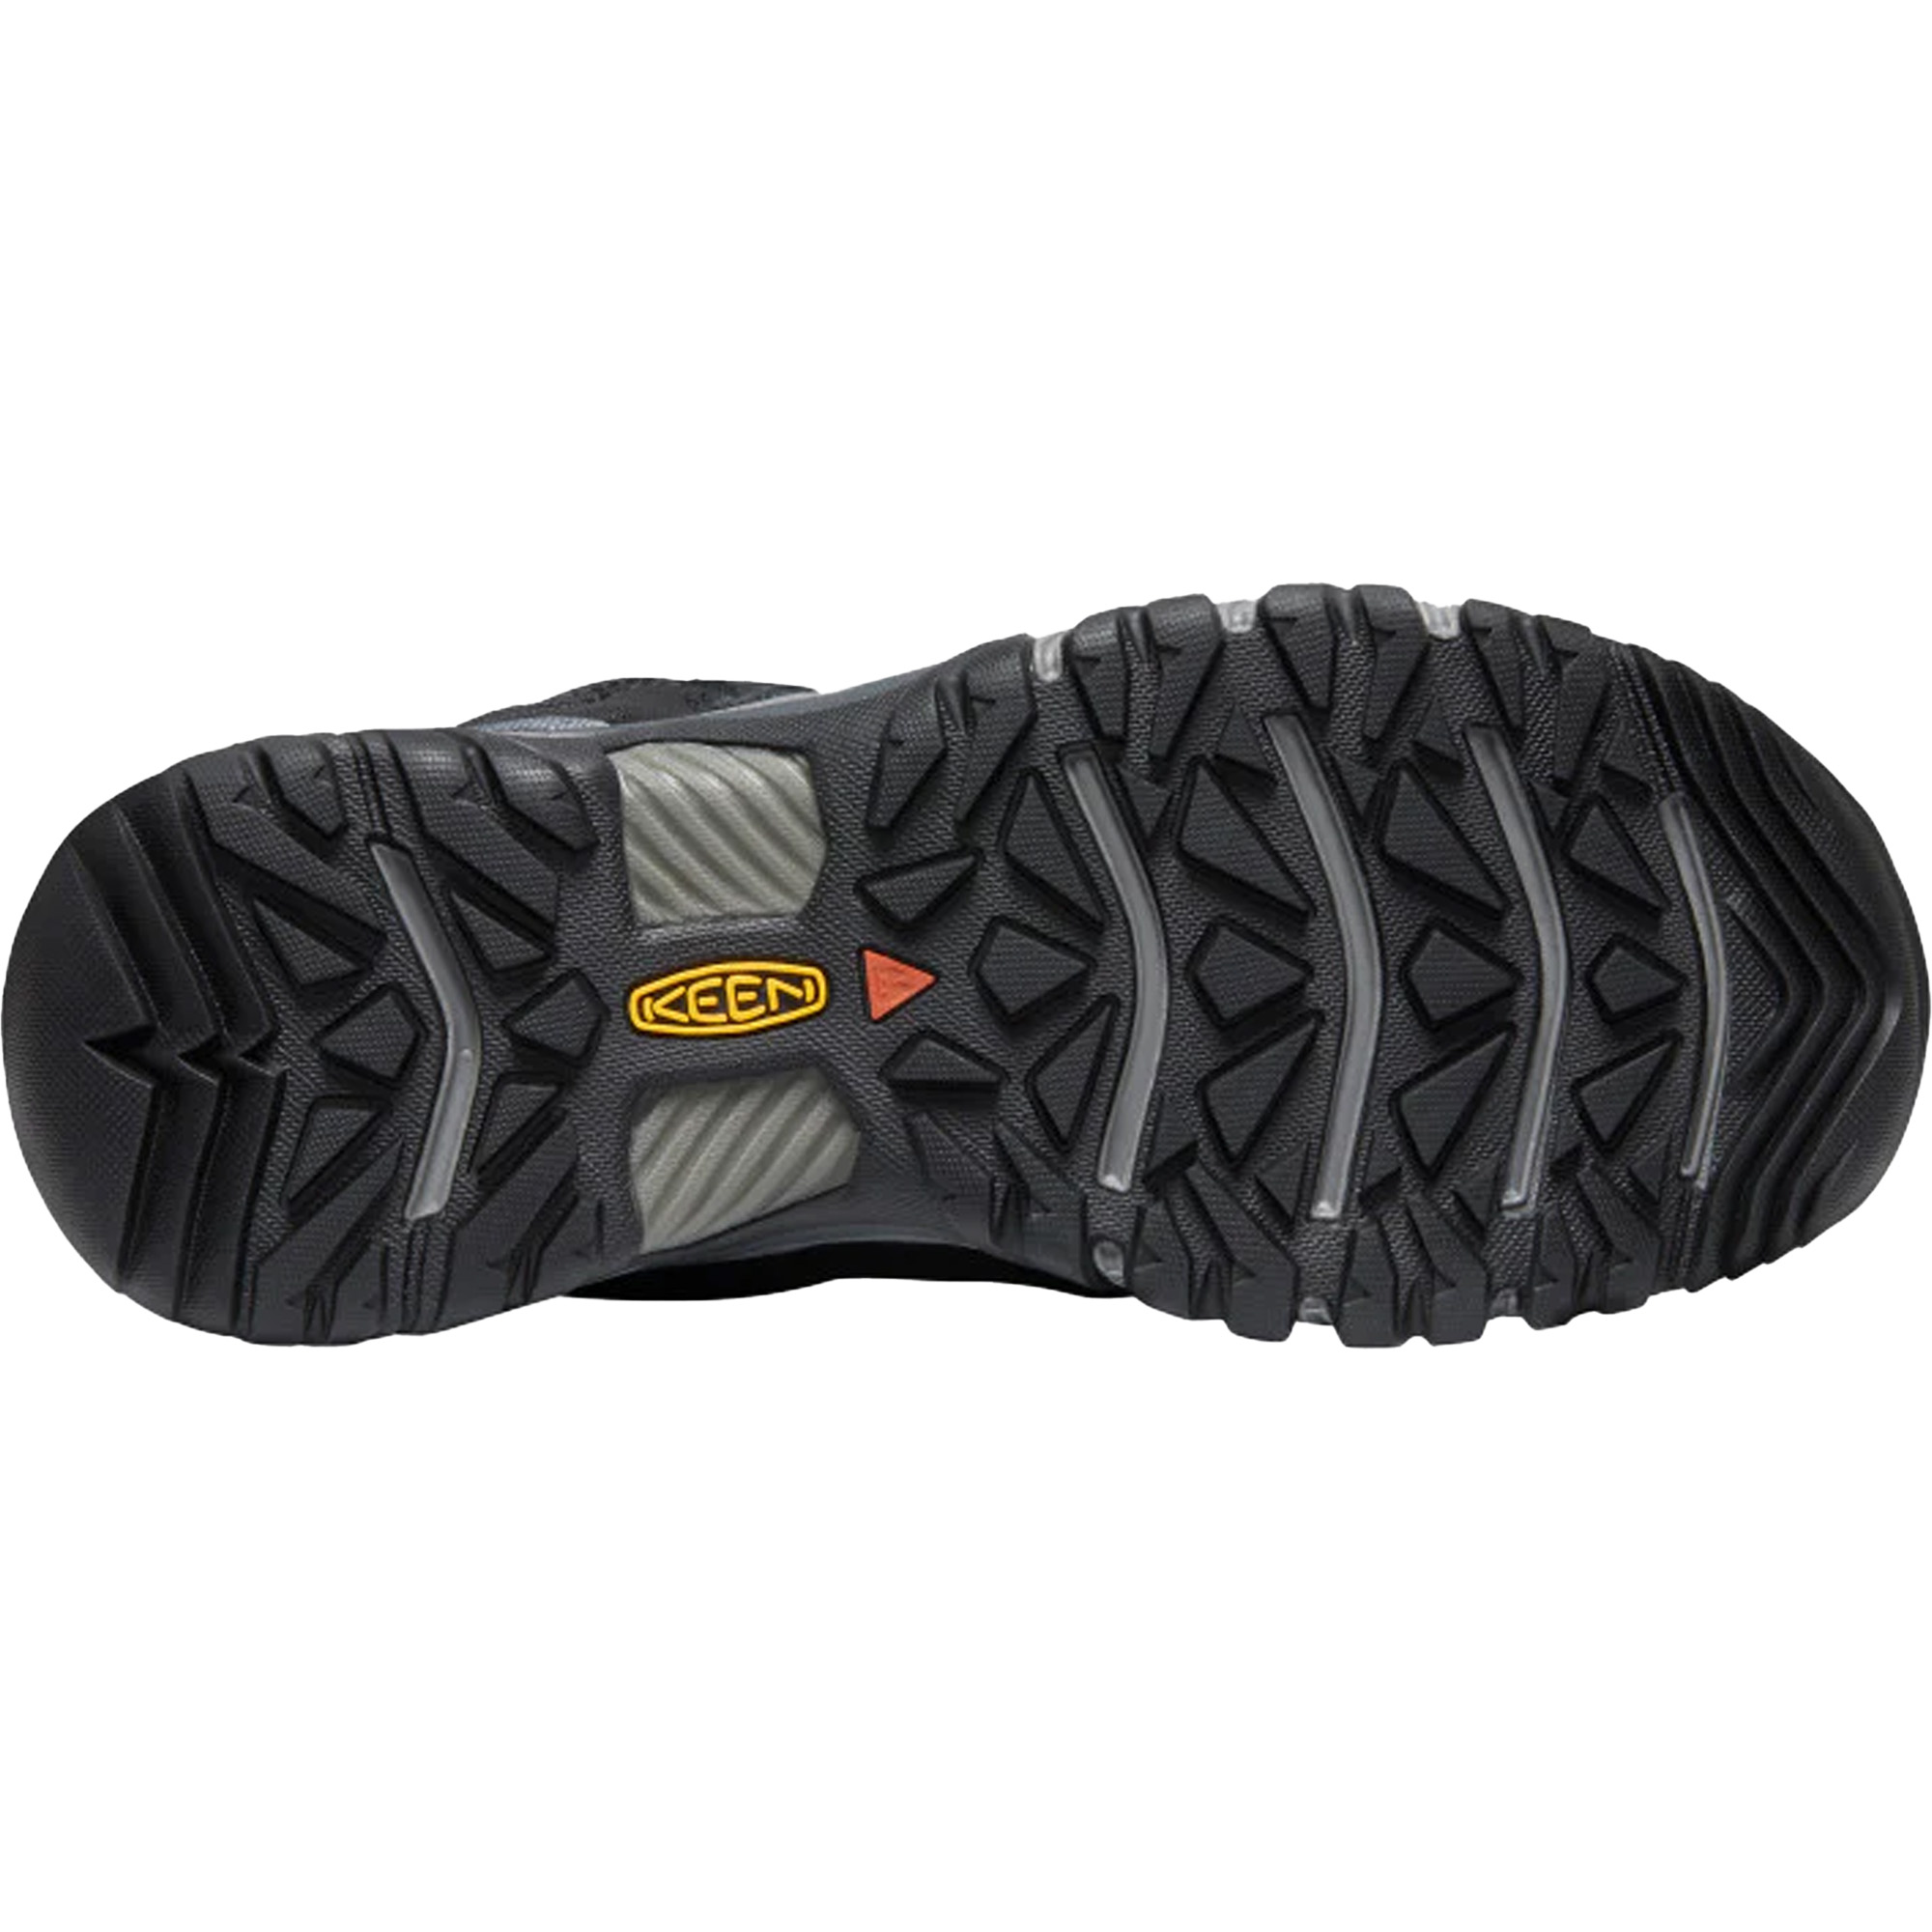 Keen Ridge Flex Waterproof Hiking Shoes